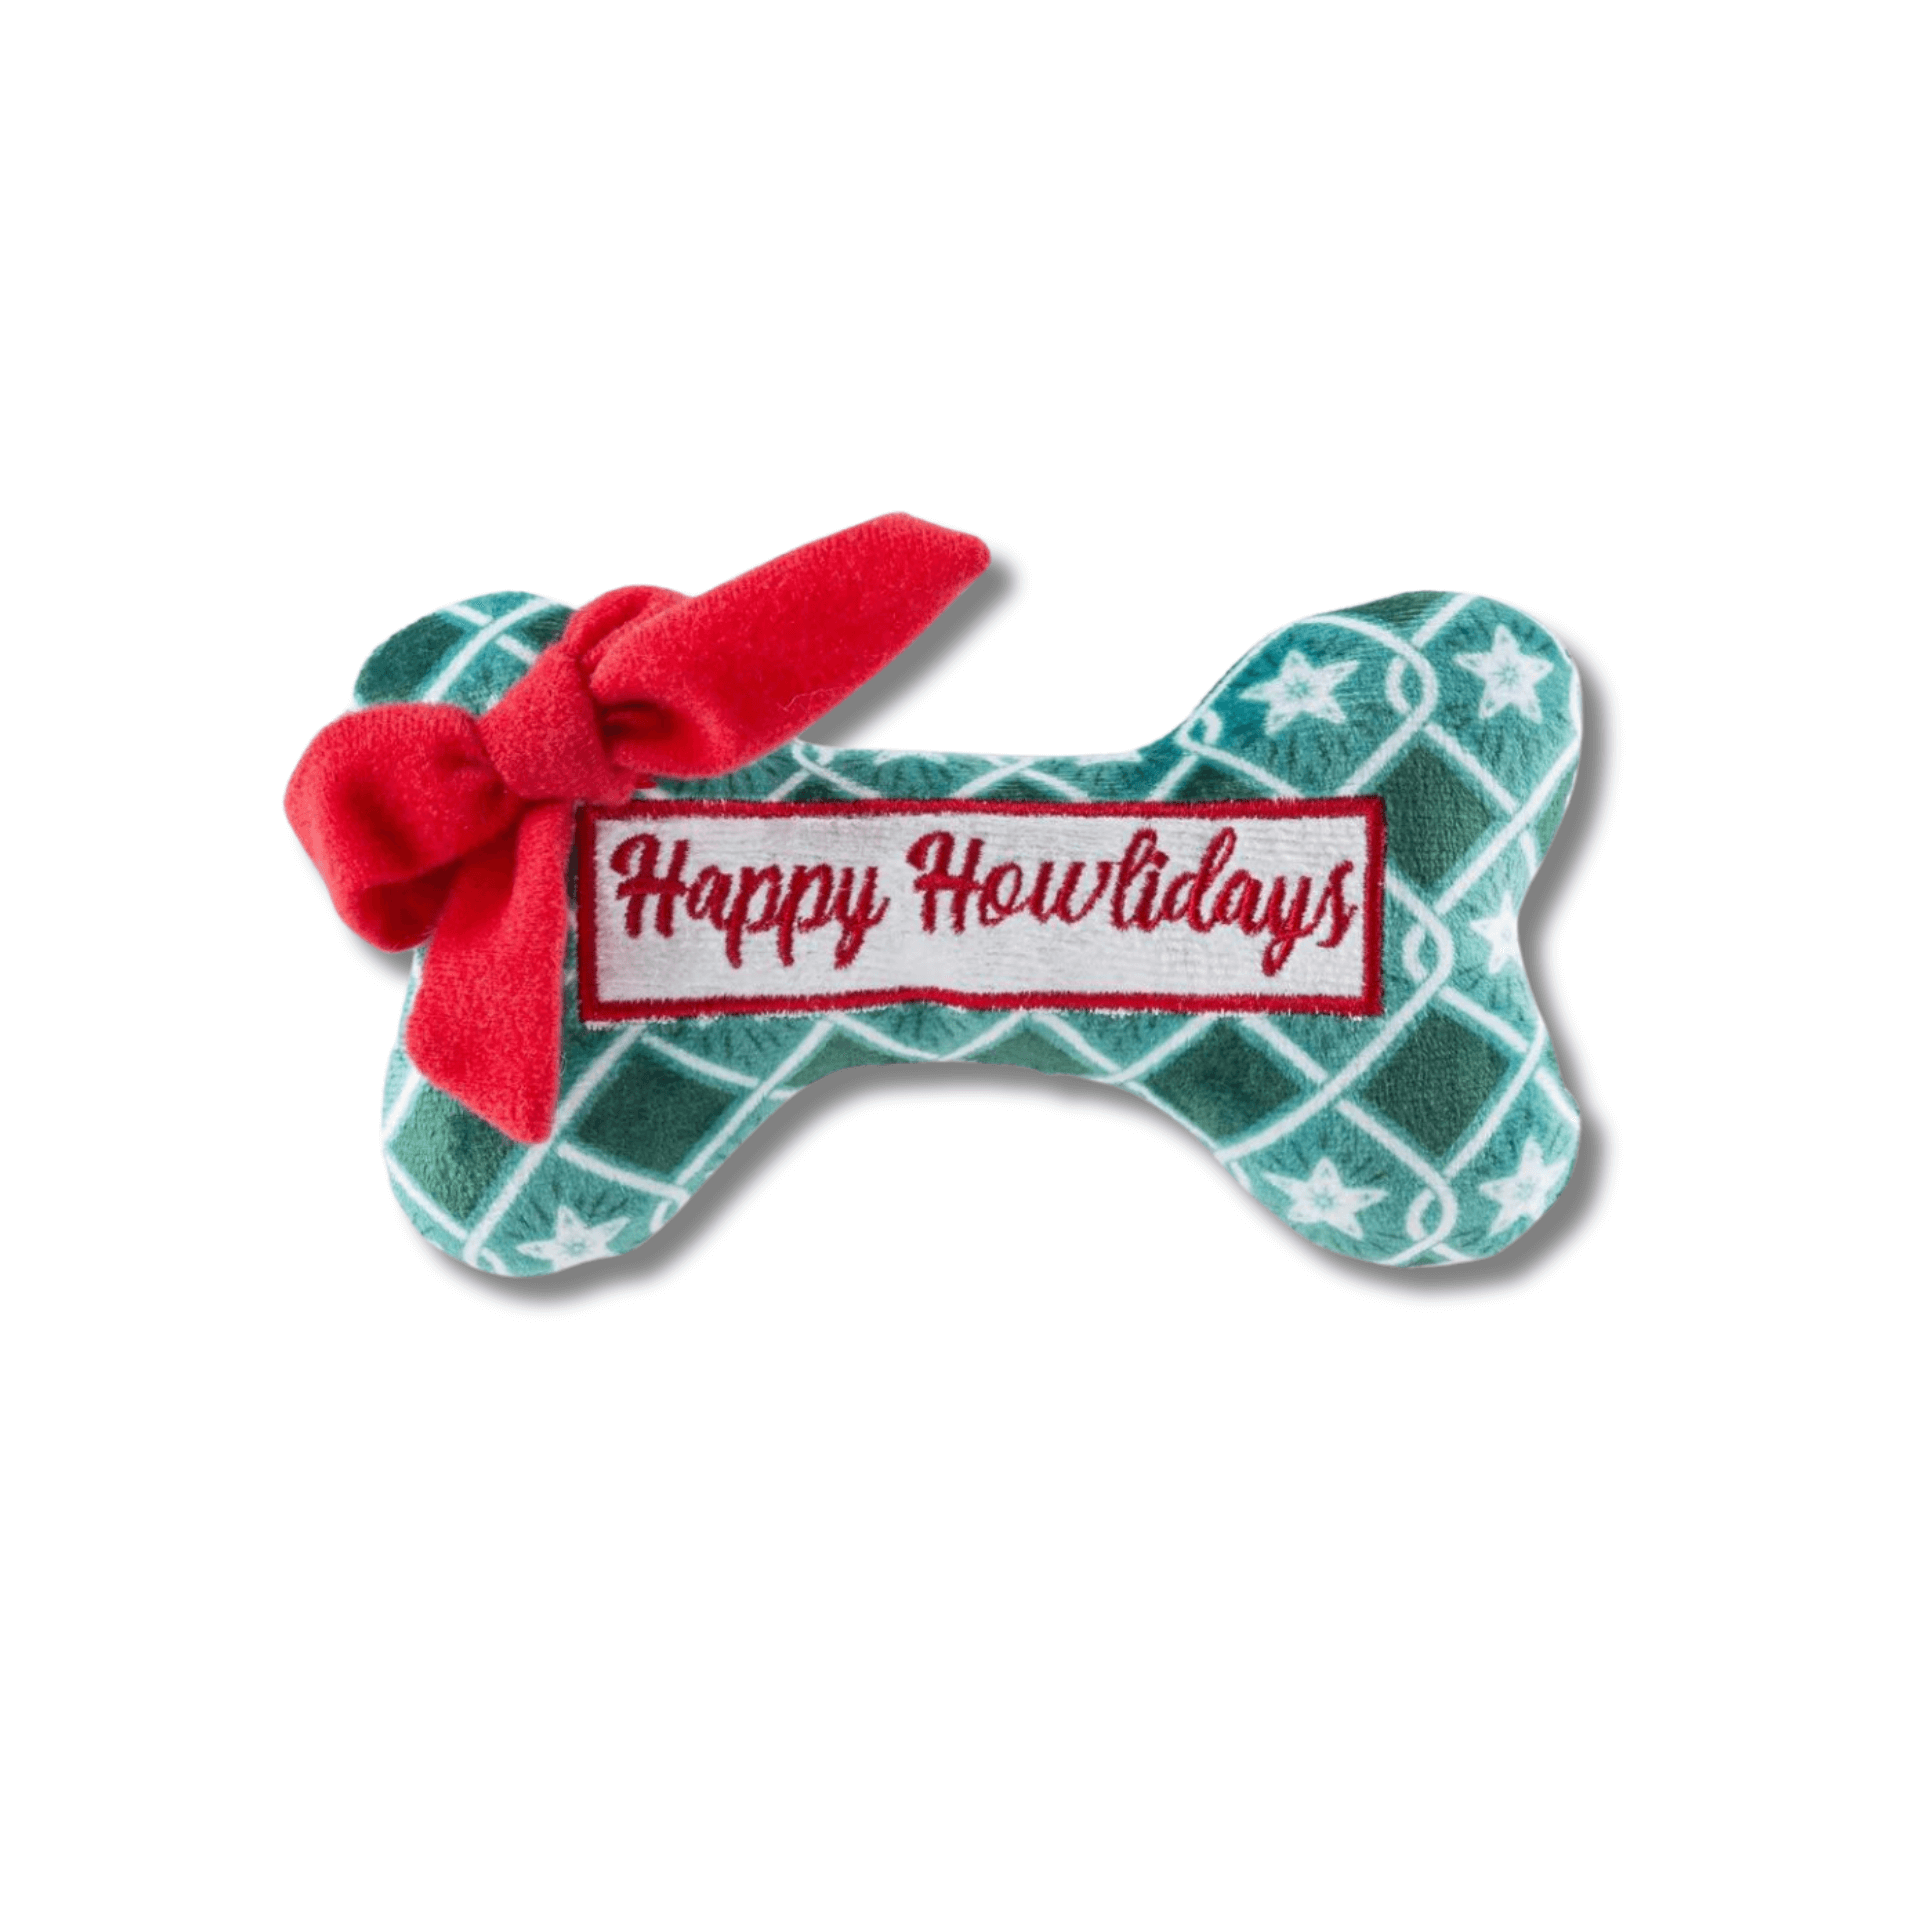 Christmas themed dog toy, happy holidays 